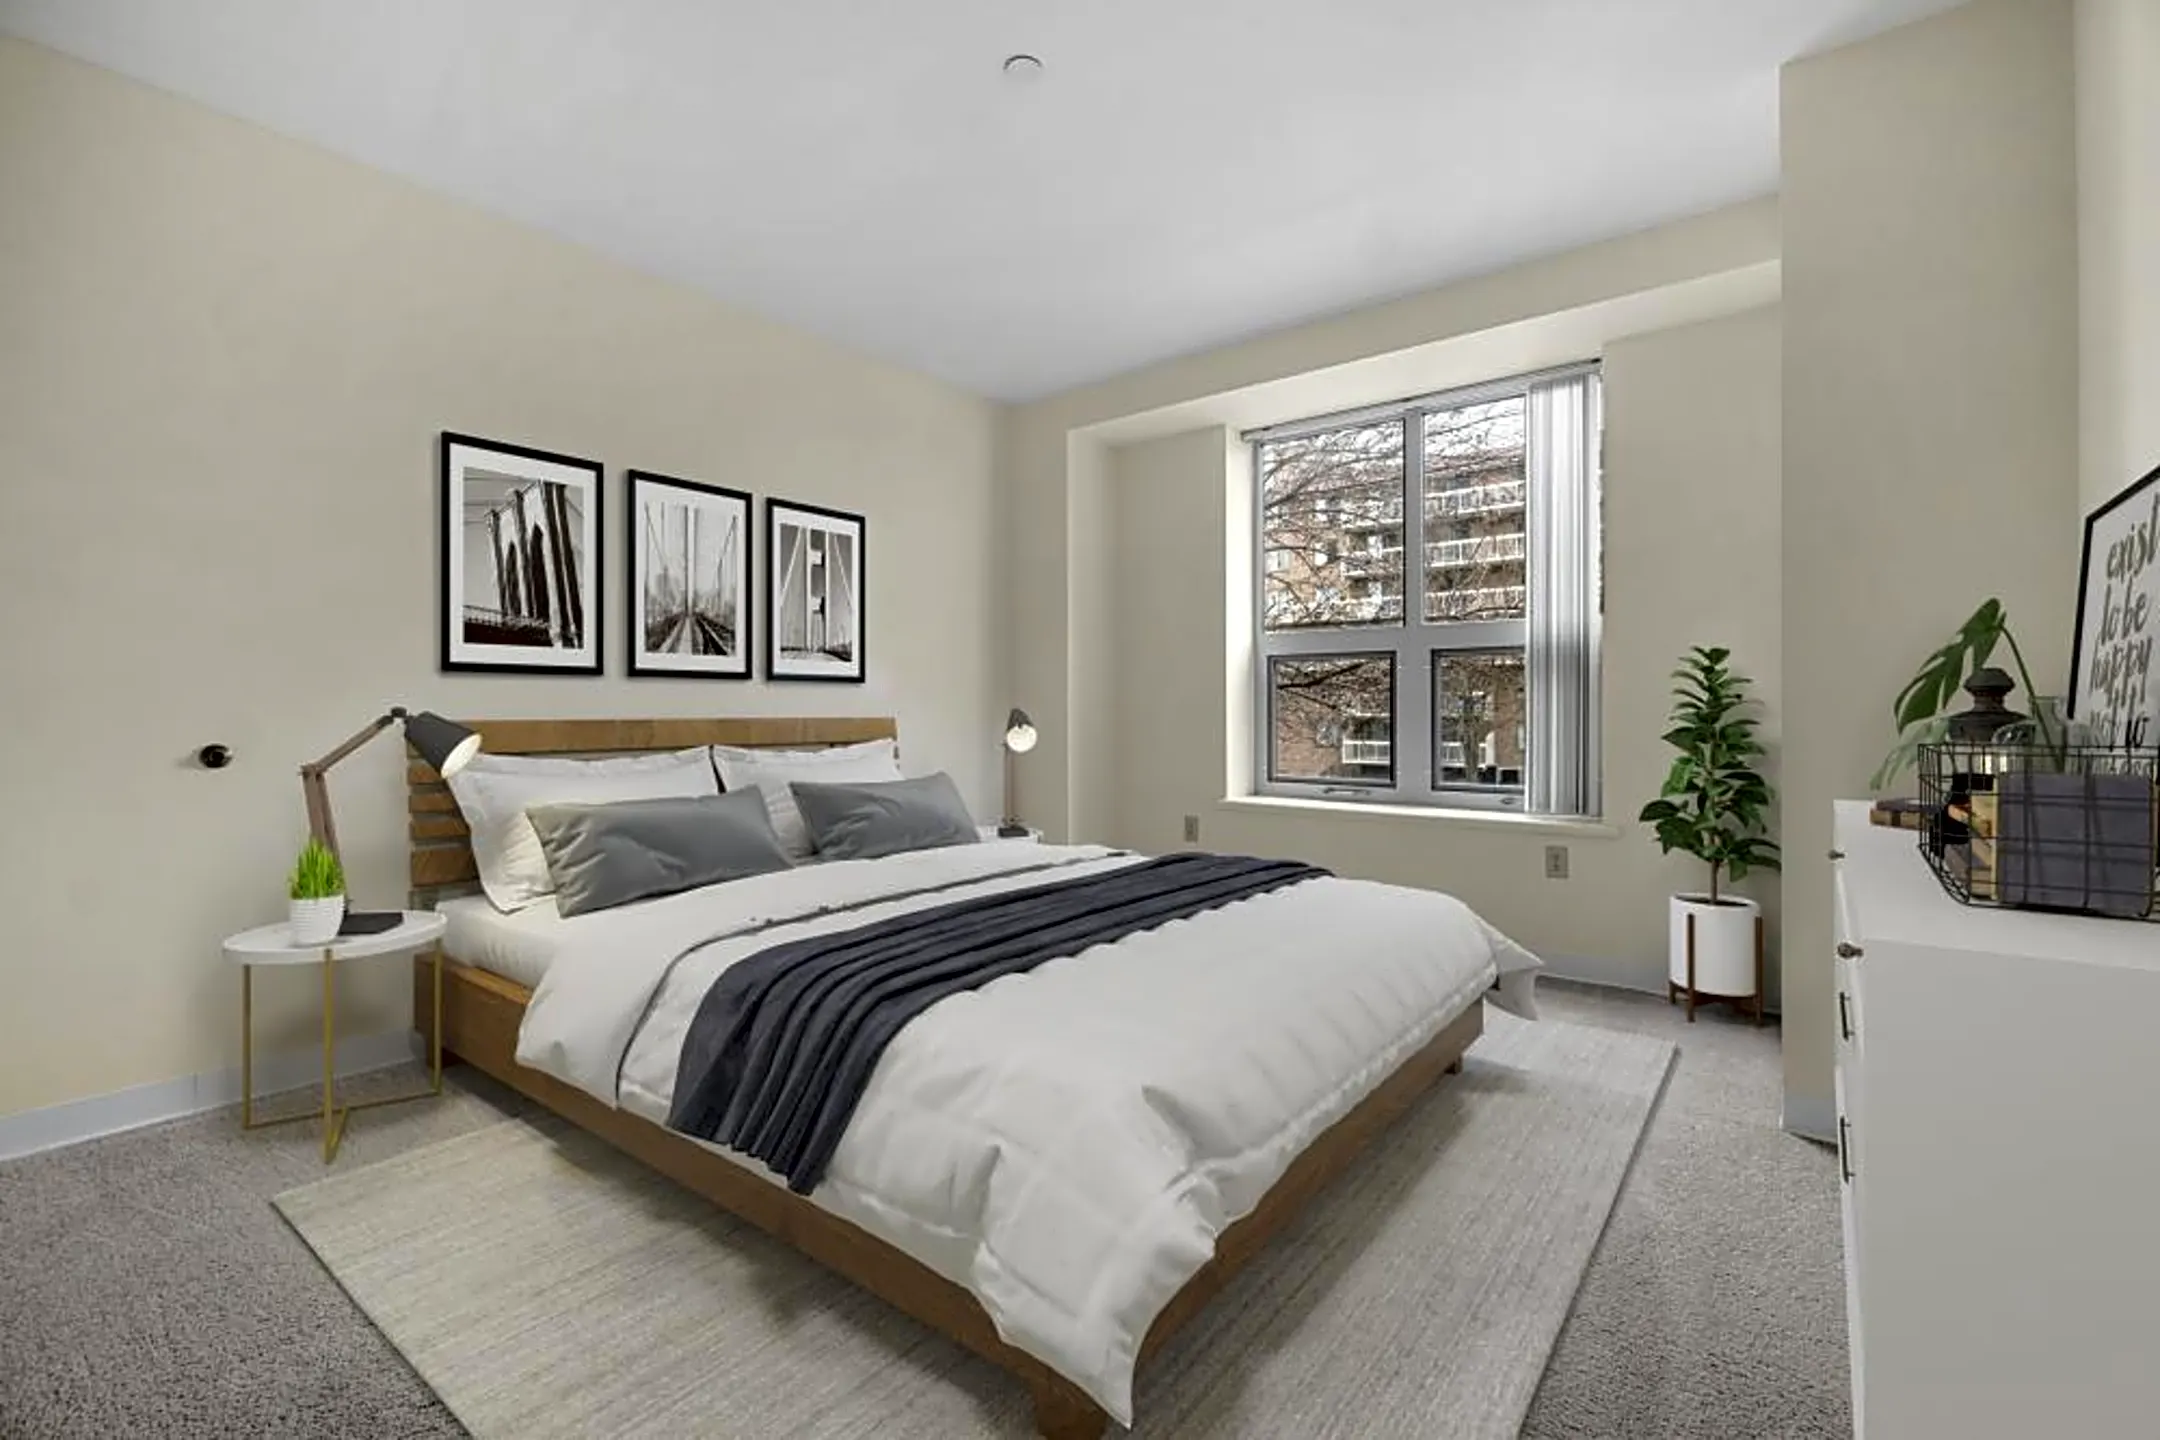 8 Kimball Ct Burlington MA Apartments for Rent Rent